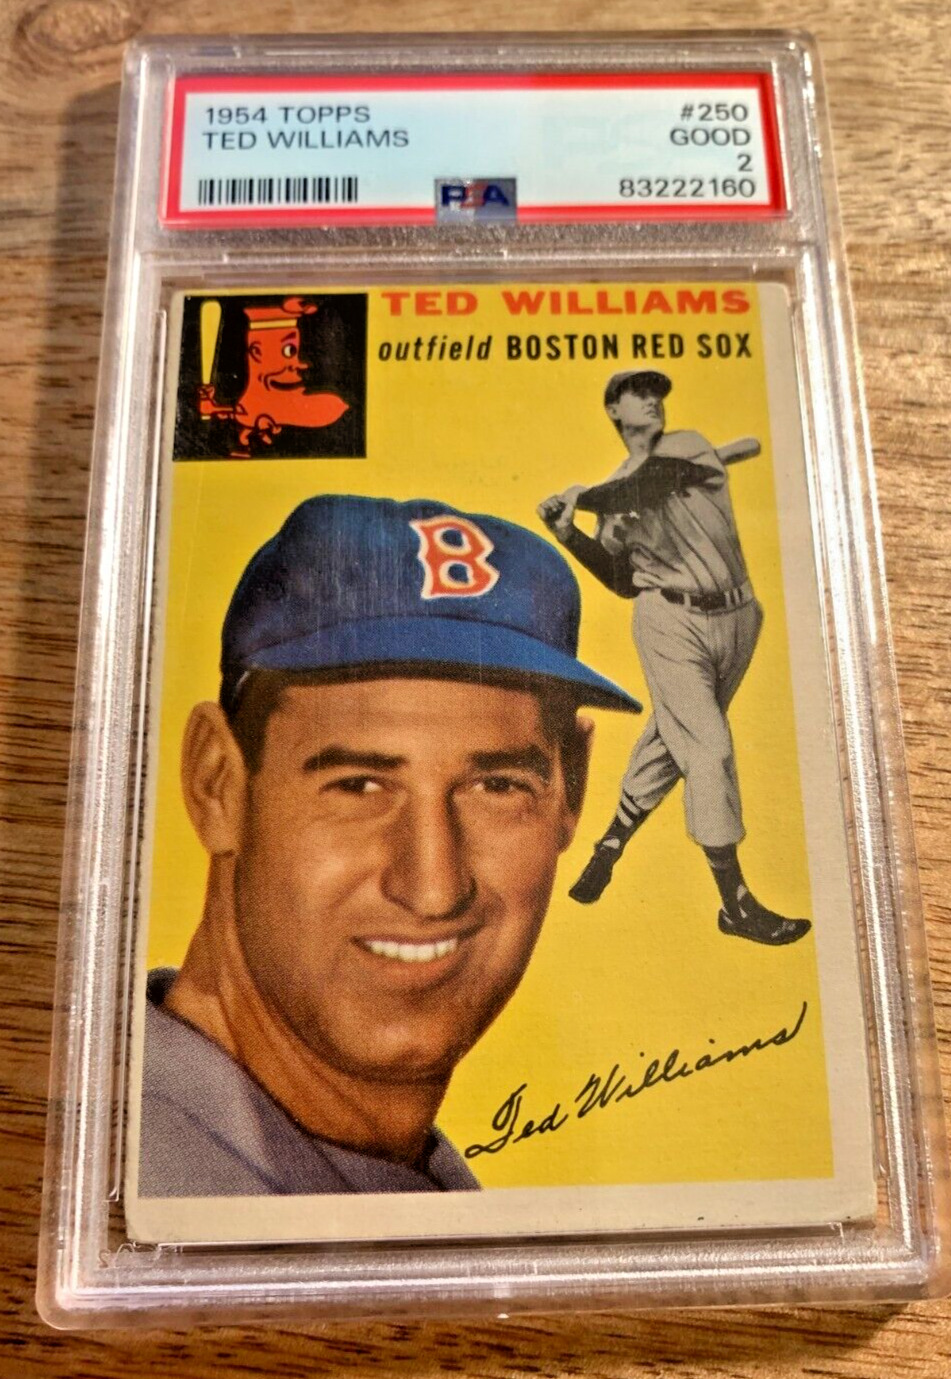 Vintage 1954 Topps Baseball - Ted Williams #250 - PSA 2 GOOD Graded NICE LOOK